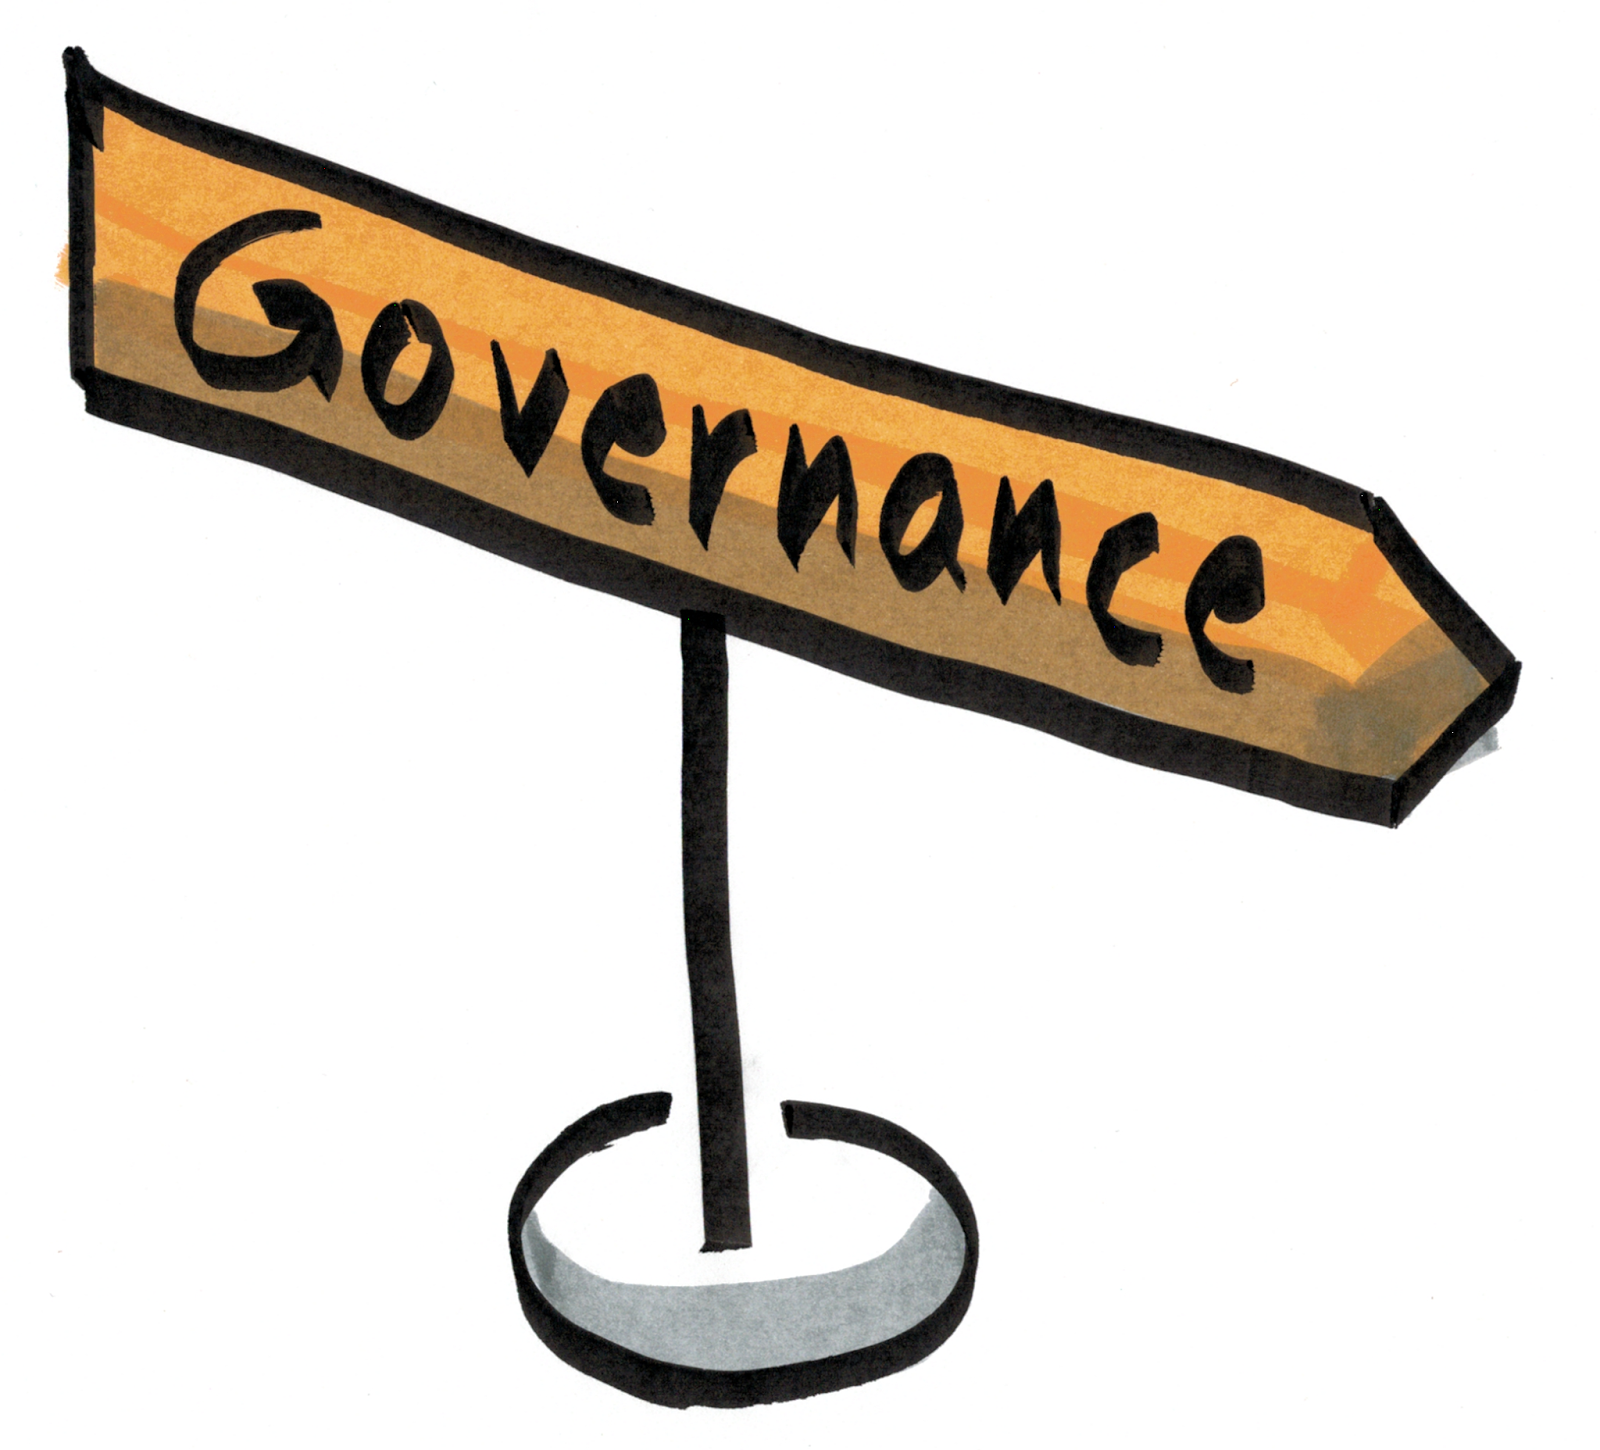 Agile Governance is guiding, not deciding